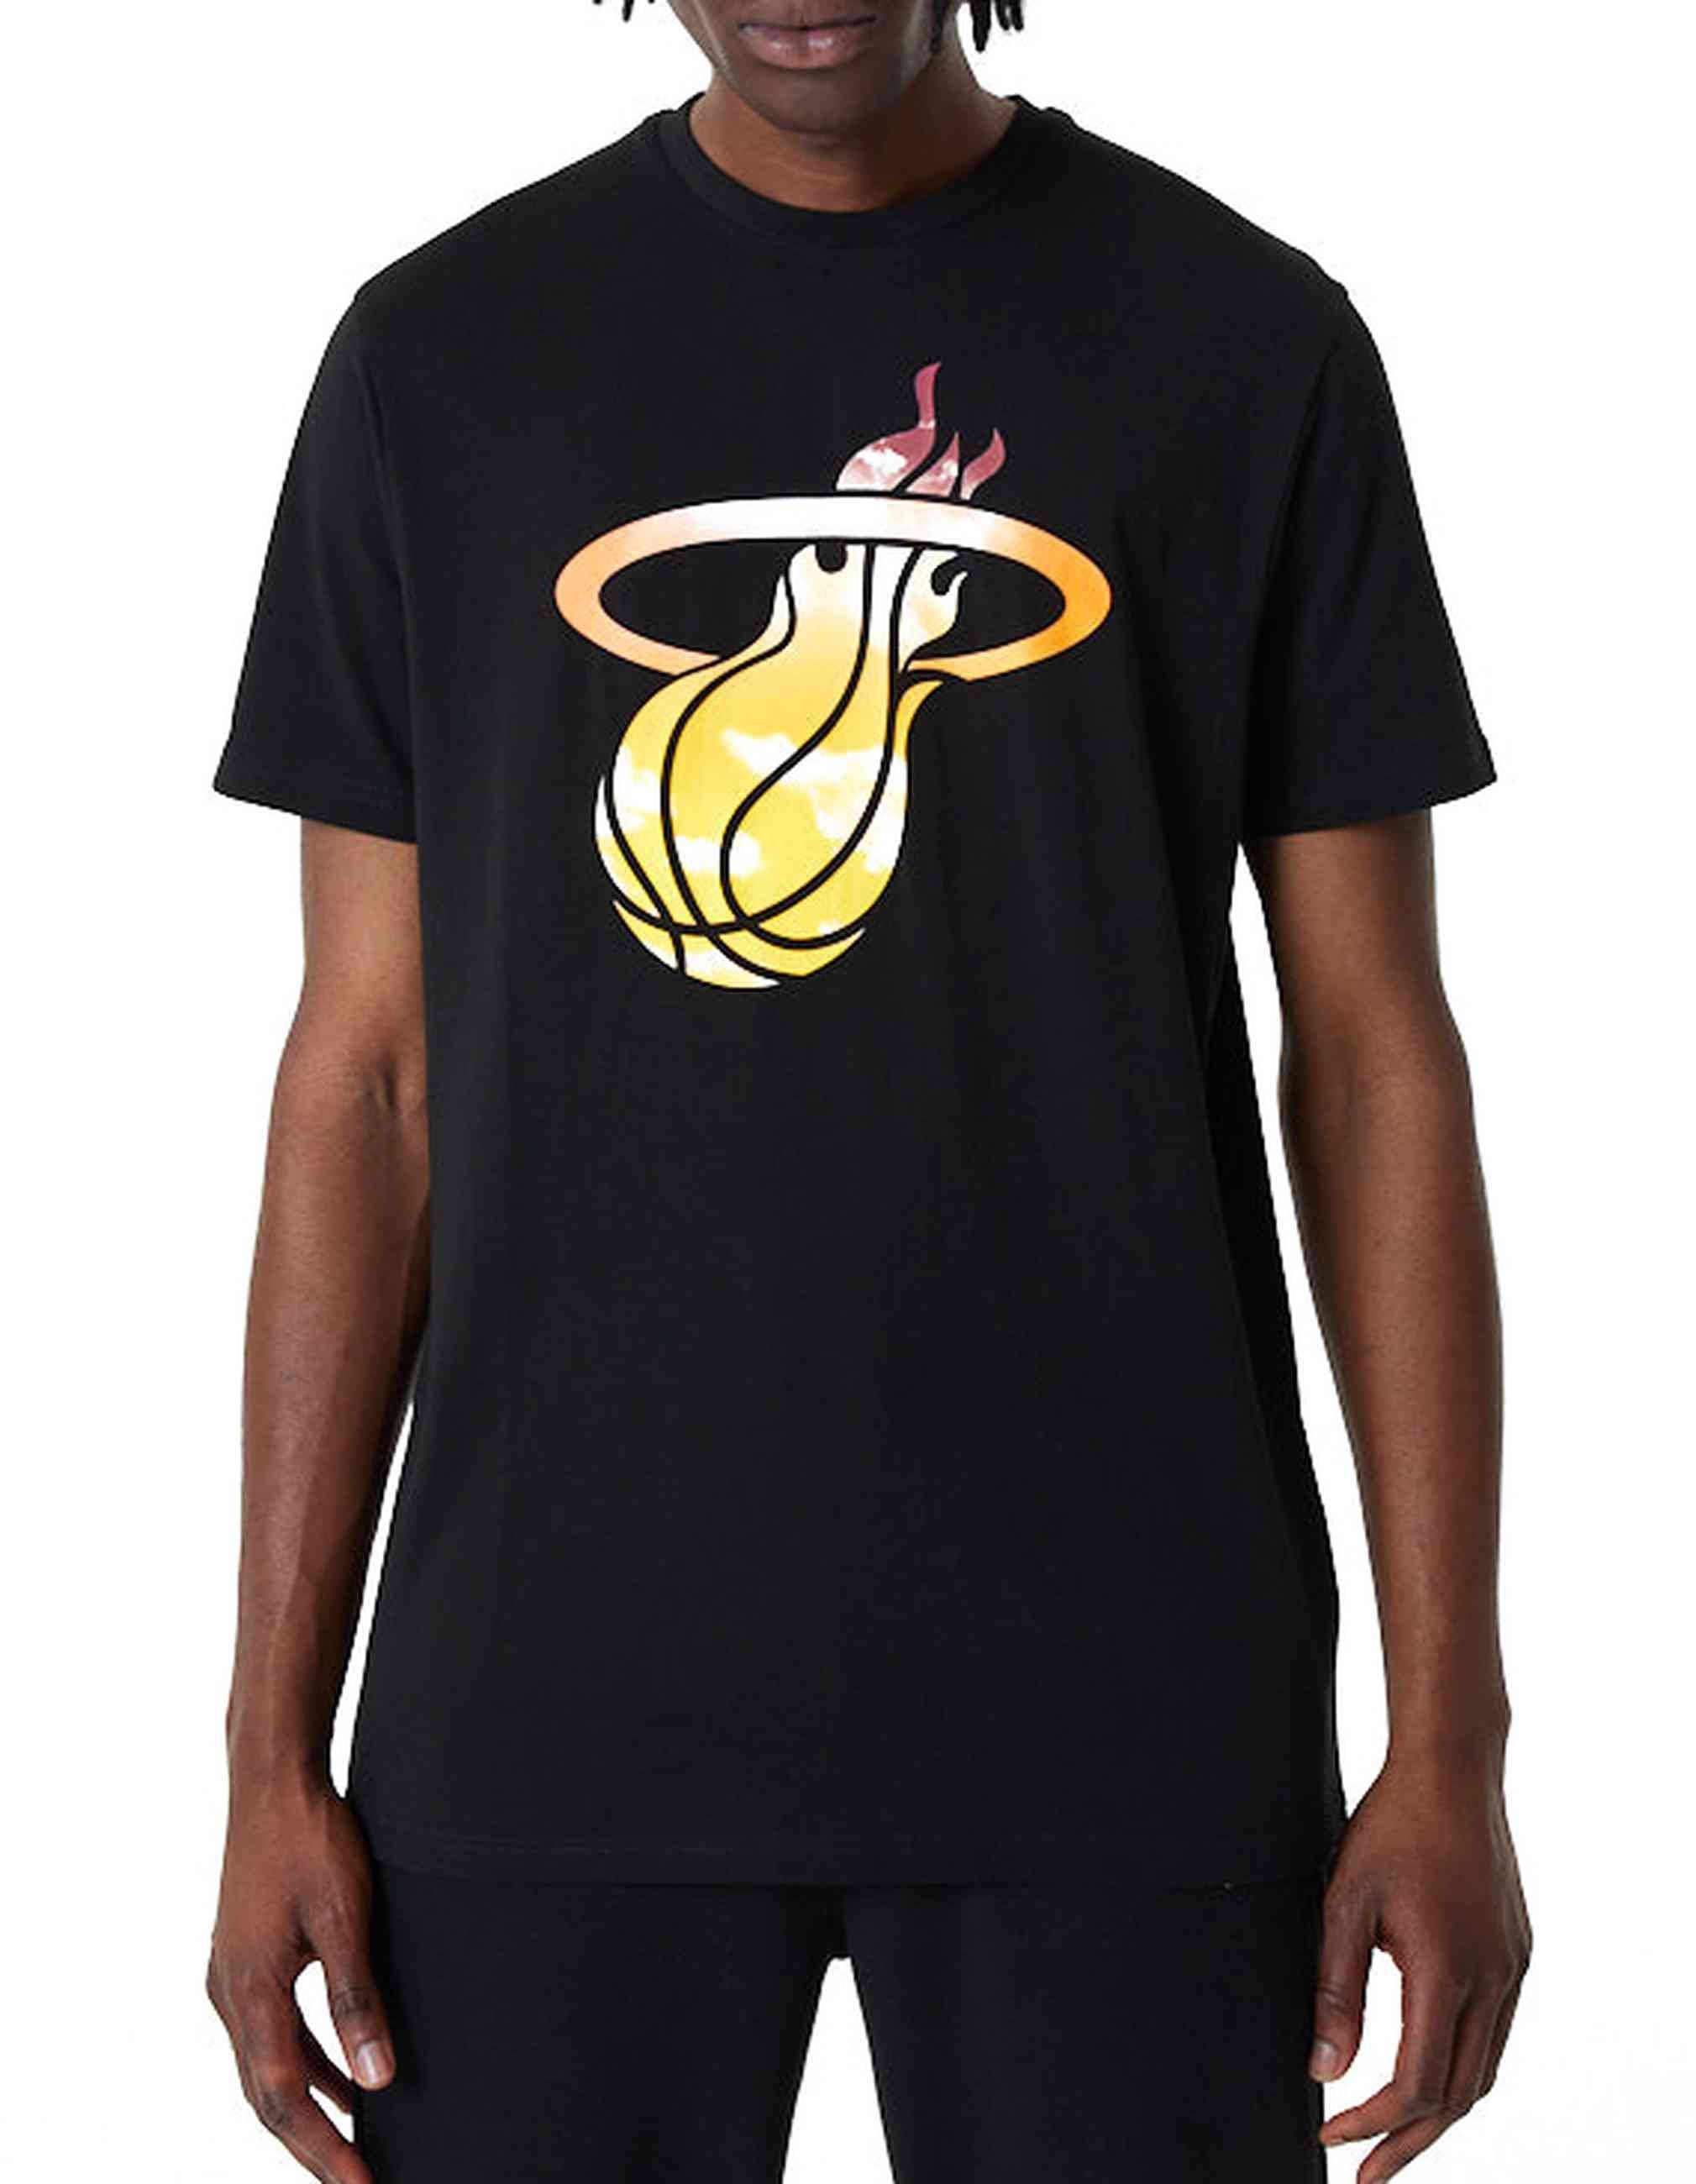 Miami New NBA Era Heat Sky Print T-Shirt